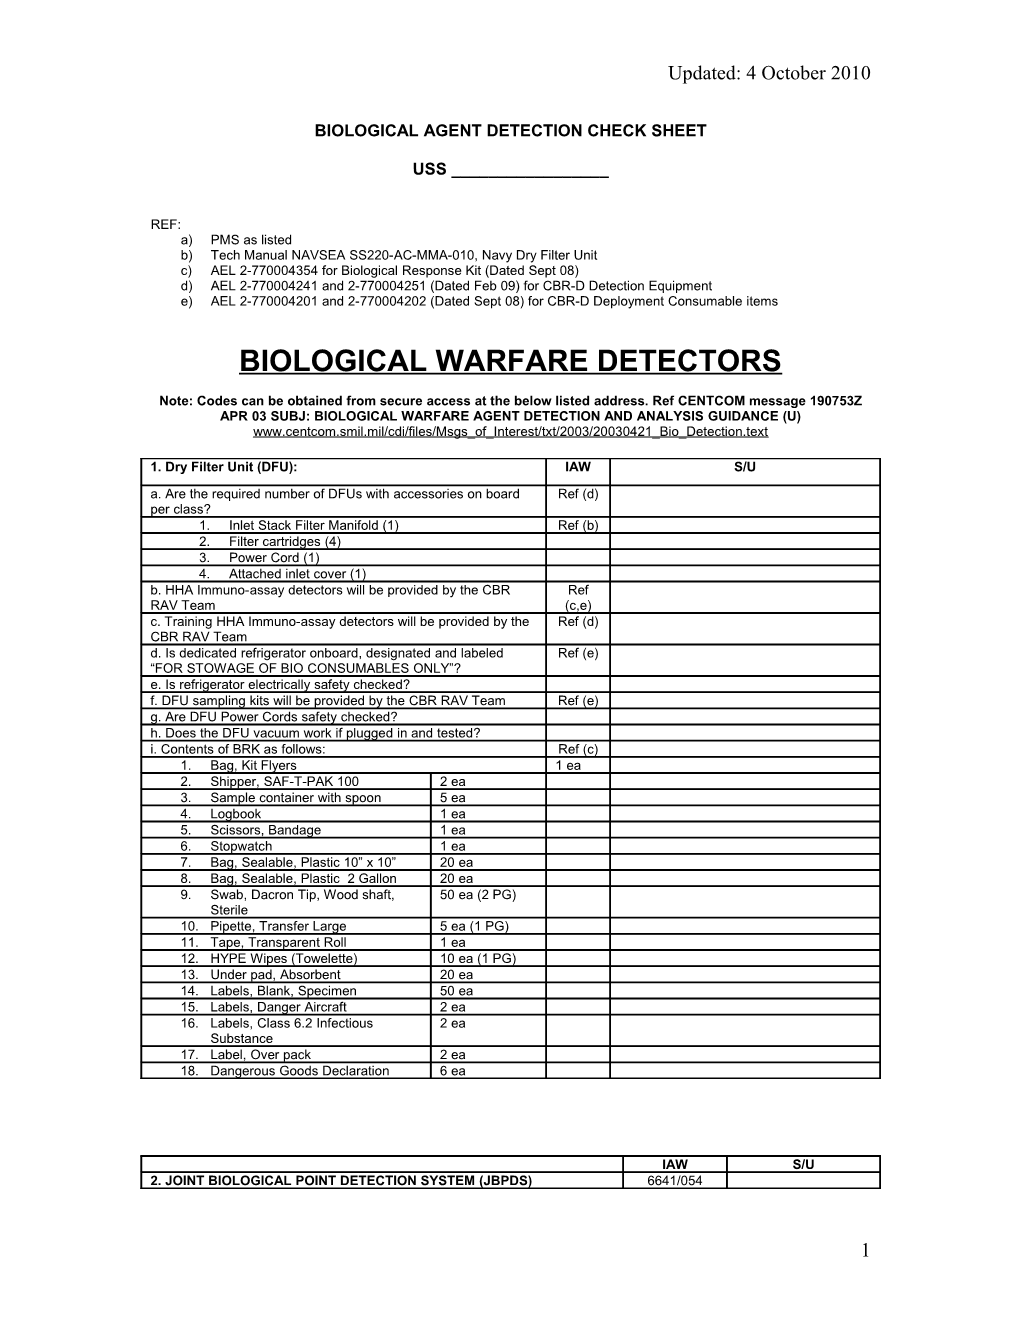 Biological Agent Detection Check Sheet